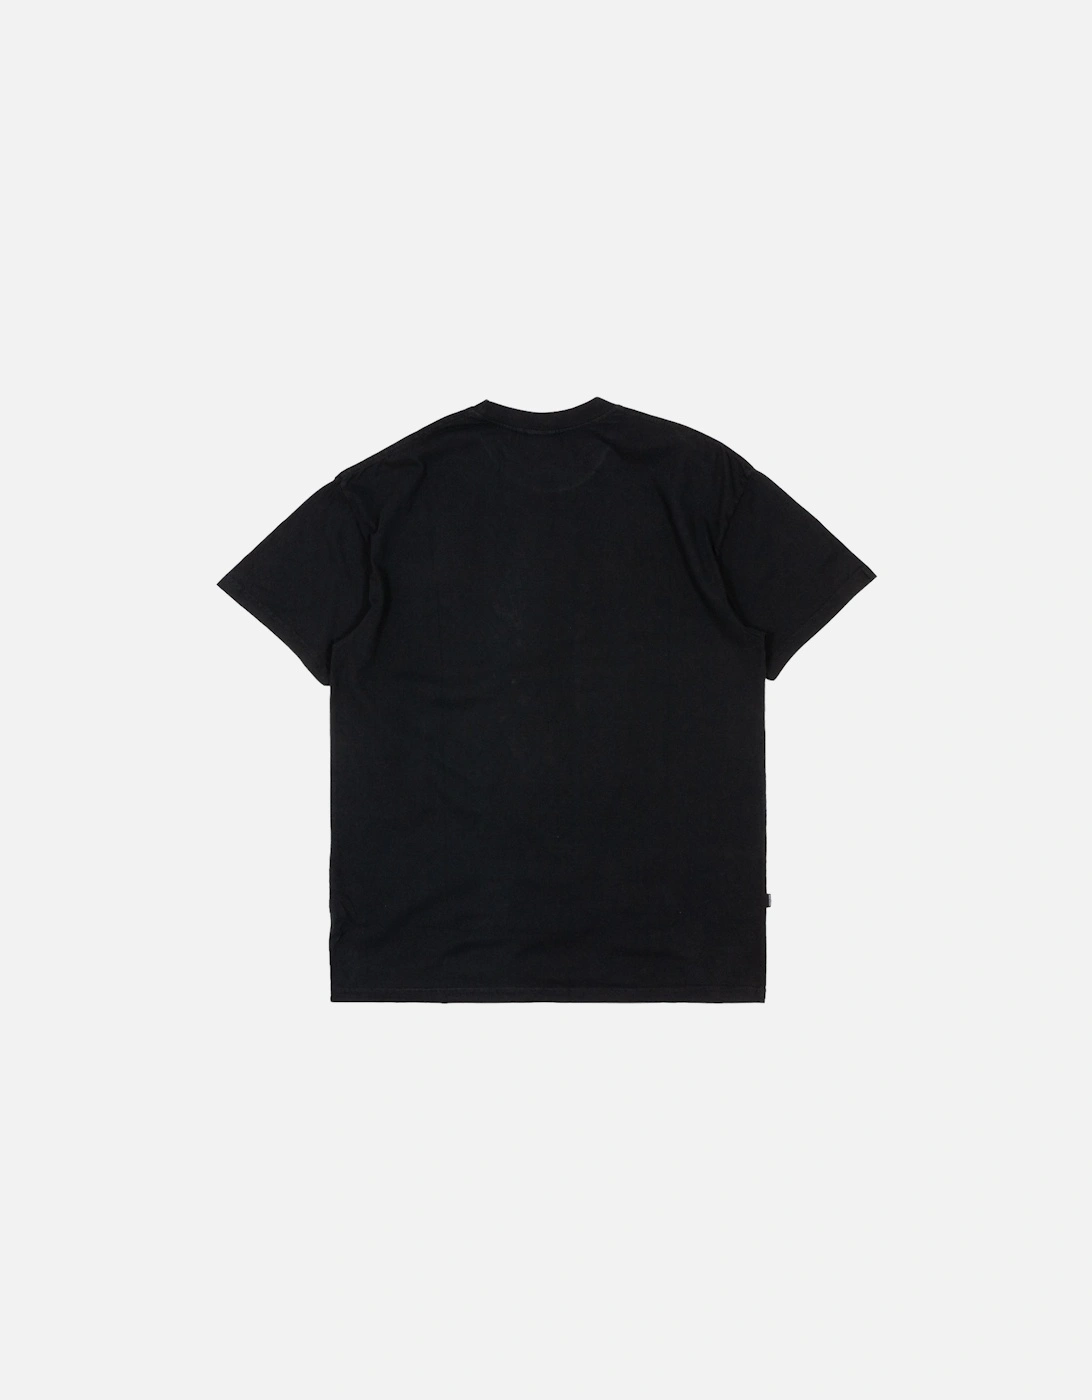 Special Feel T-Shirt - Pigment Black